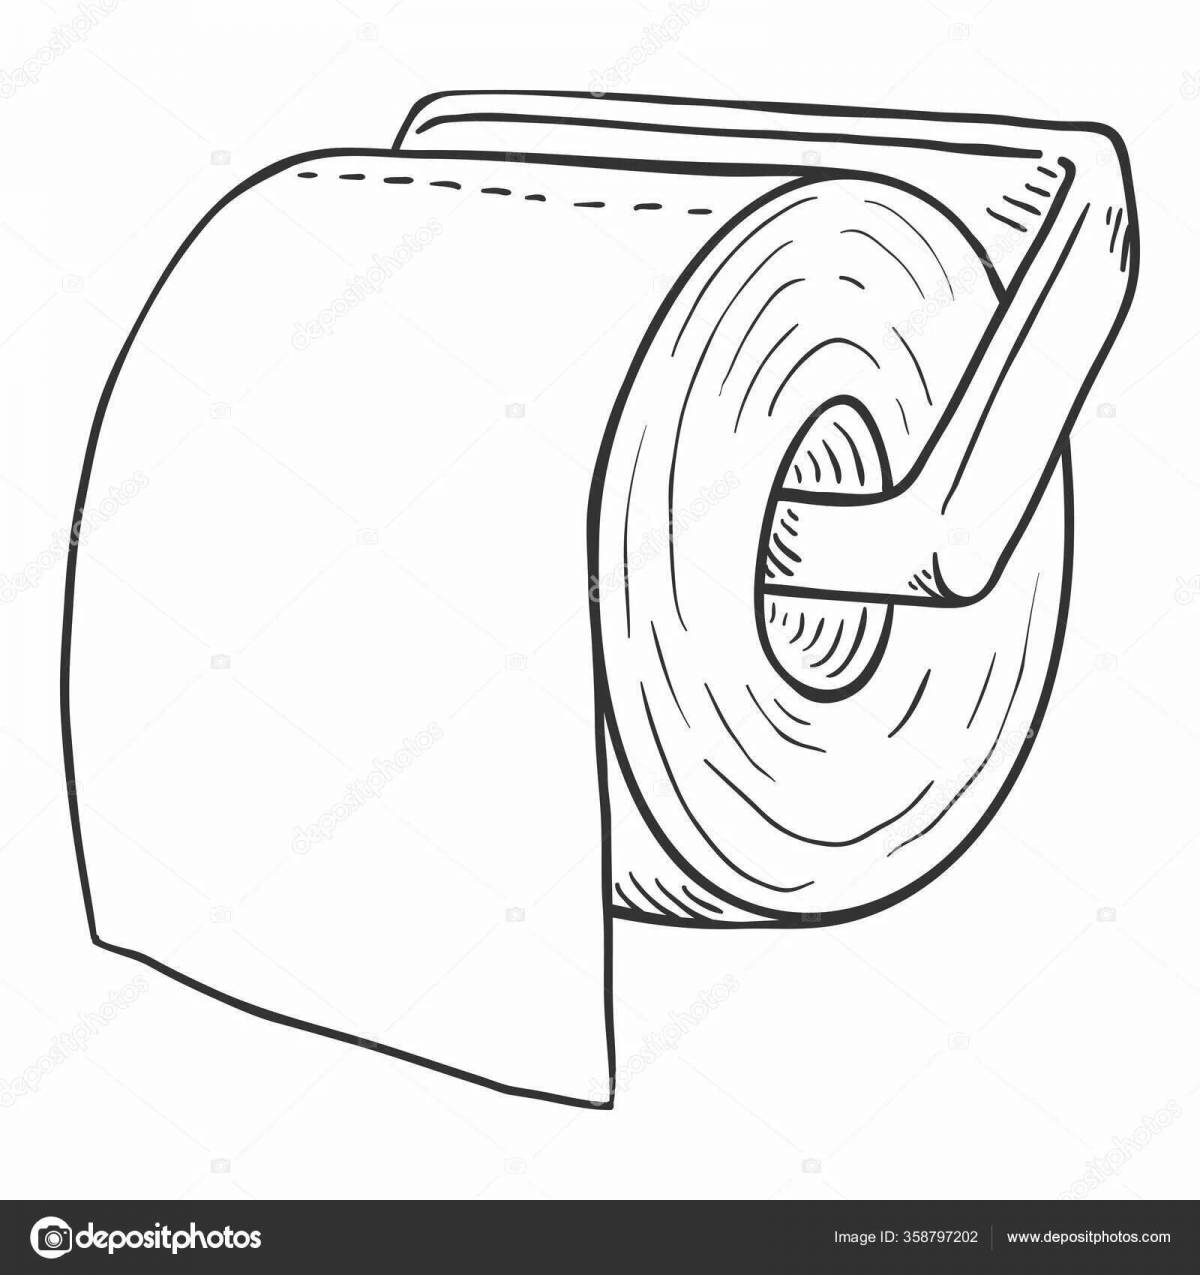 Toilet paper #7